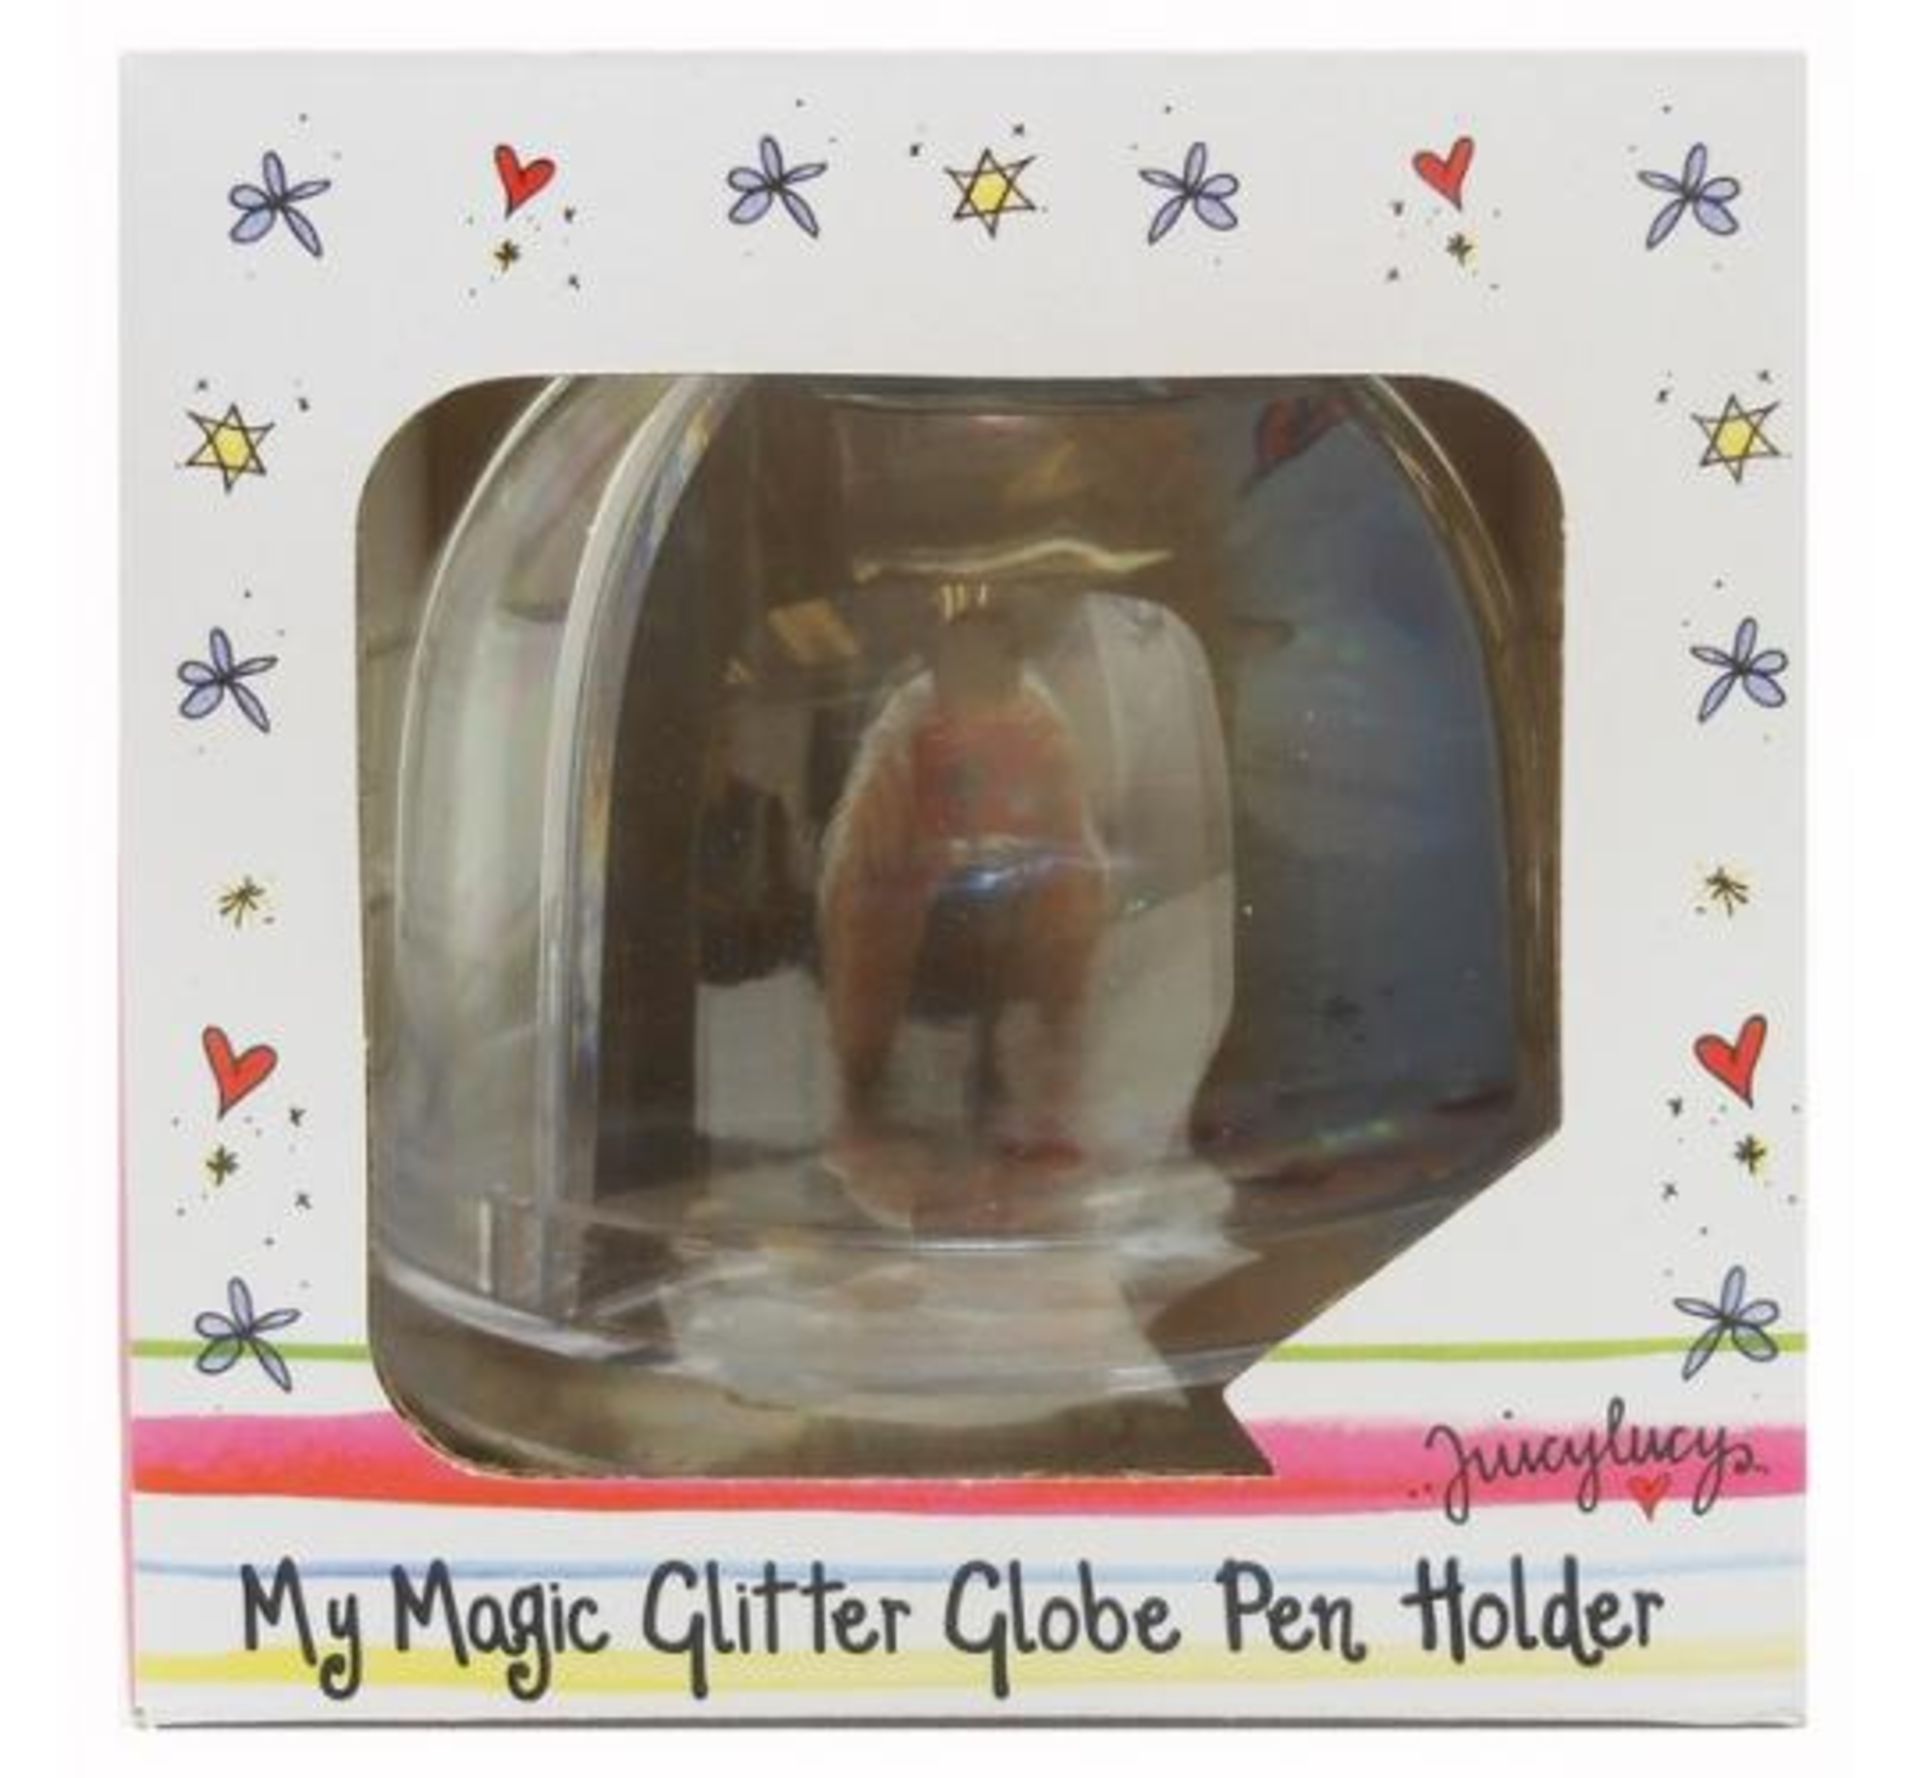 Joblot of 100 Juicy Lucy 'My Magic' Glitter Globe Pen Holder